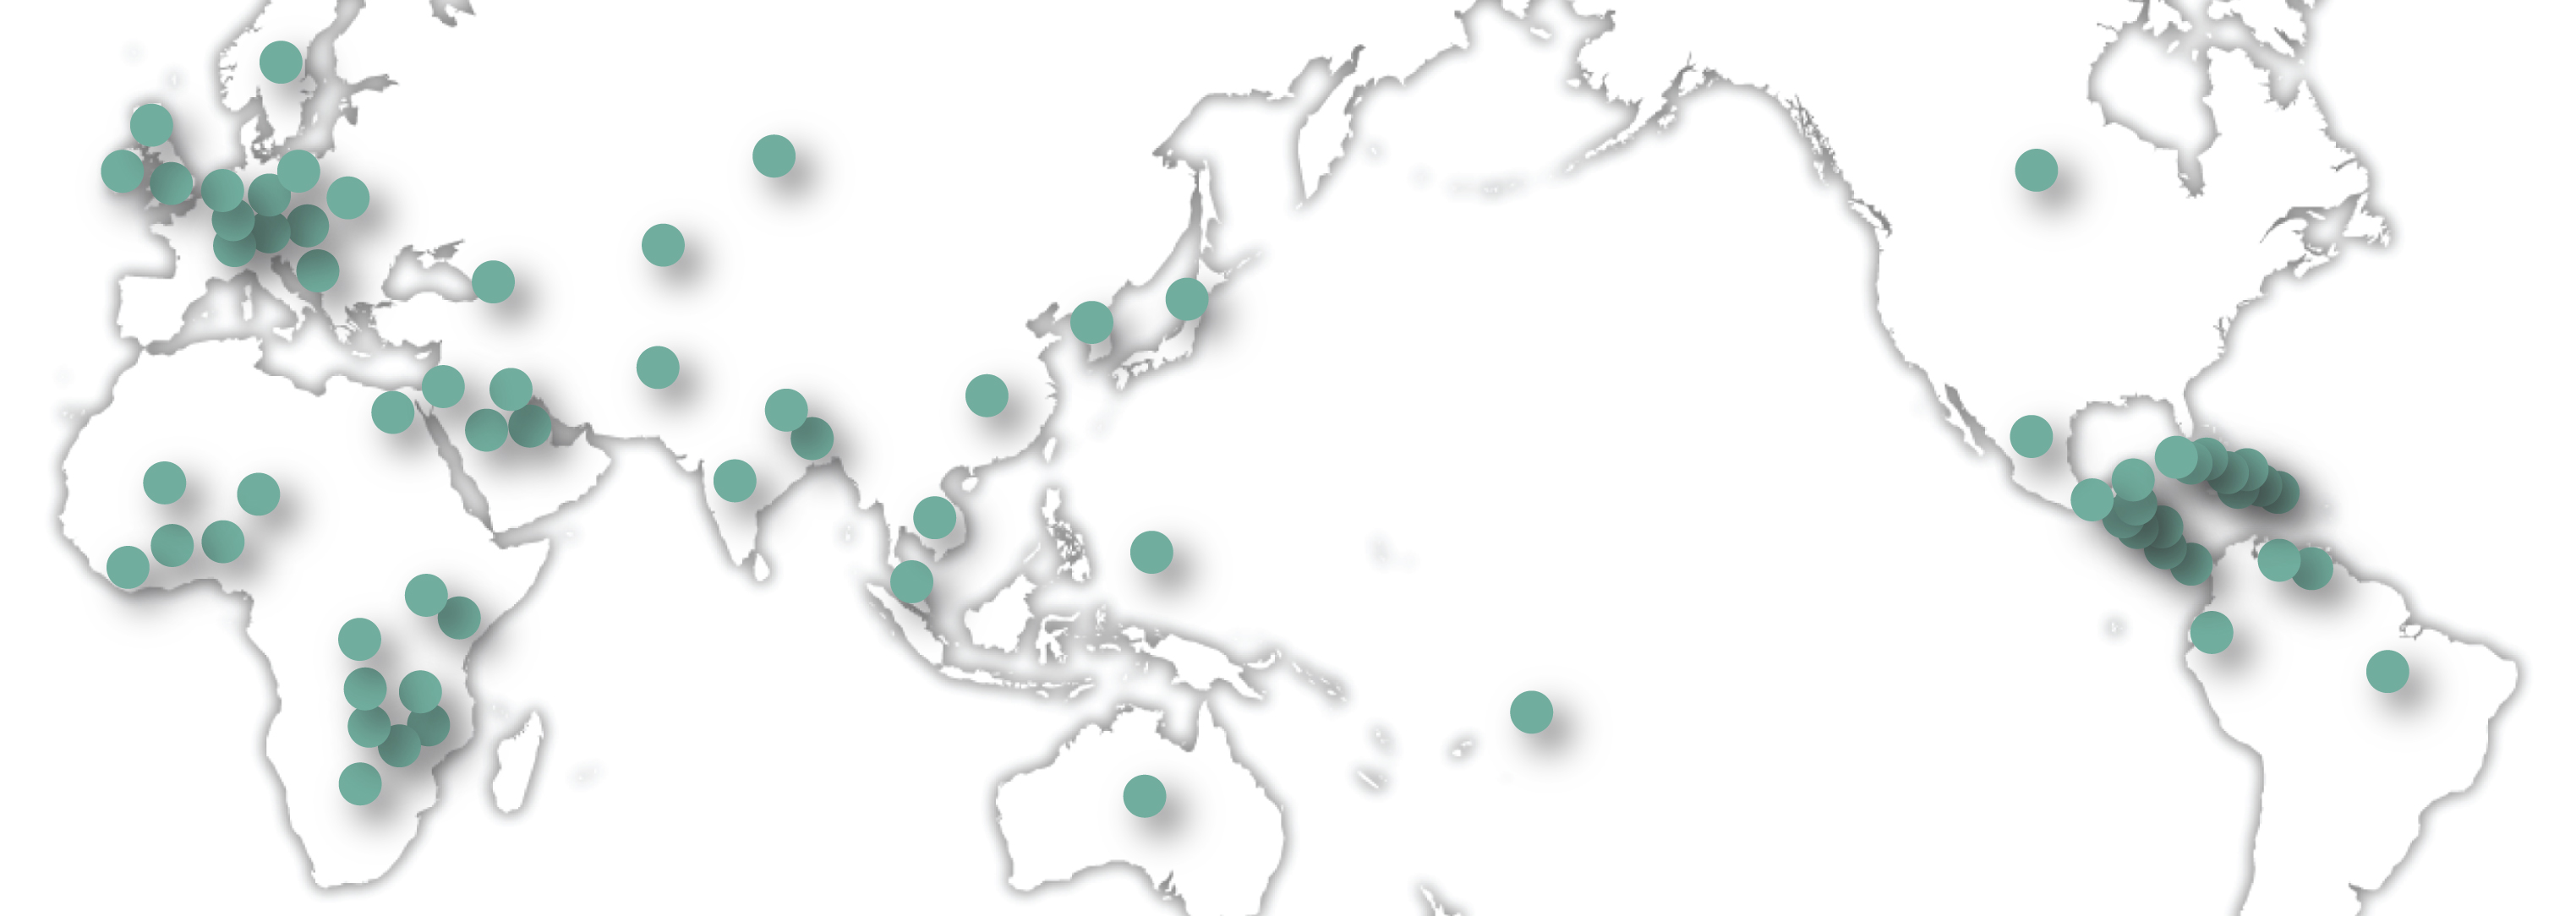 World map of alumni locations